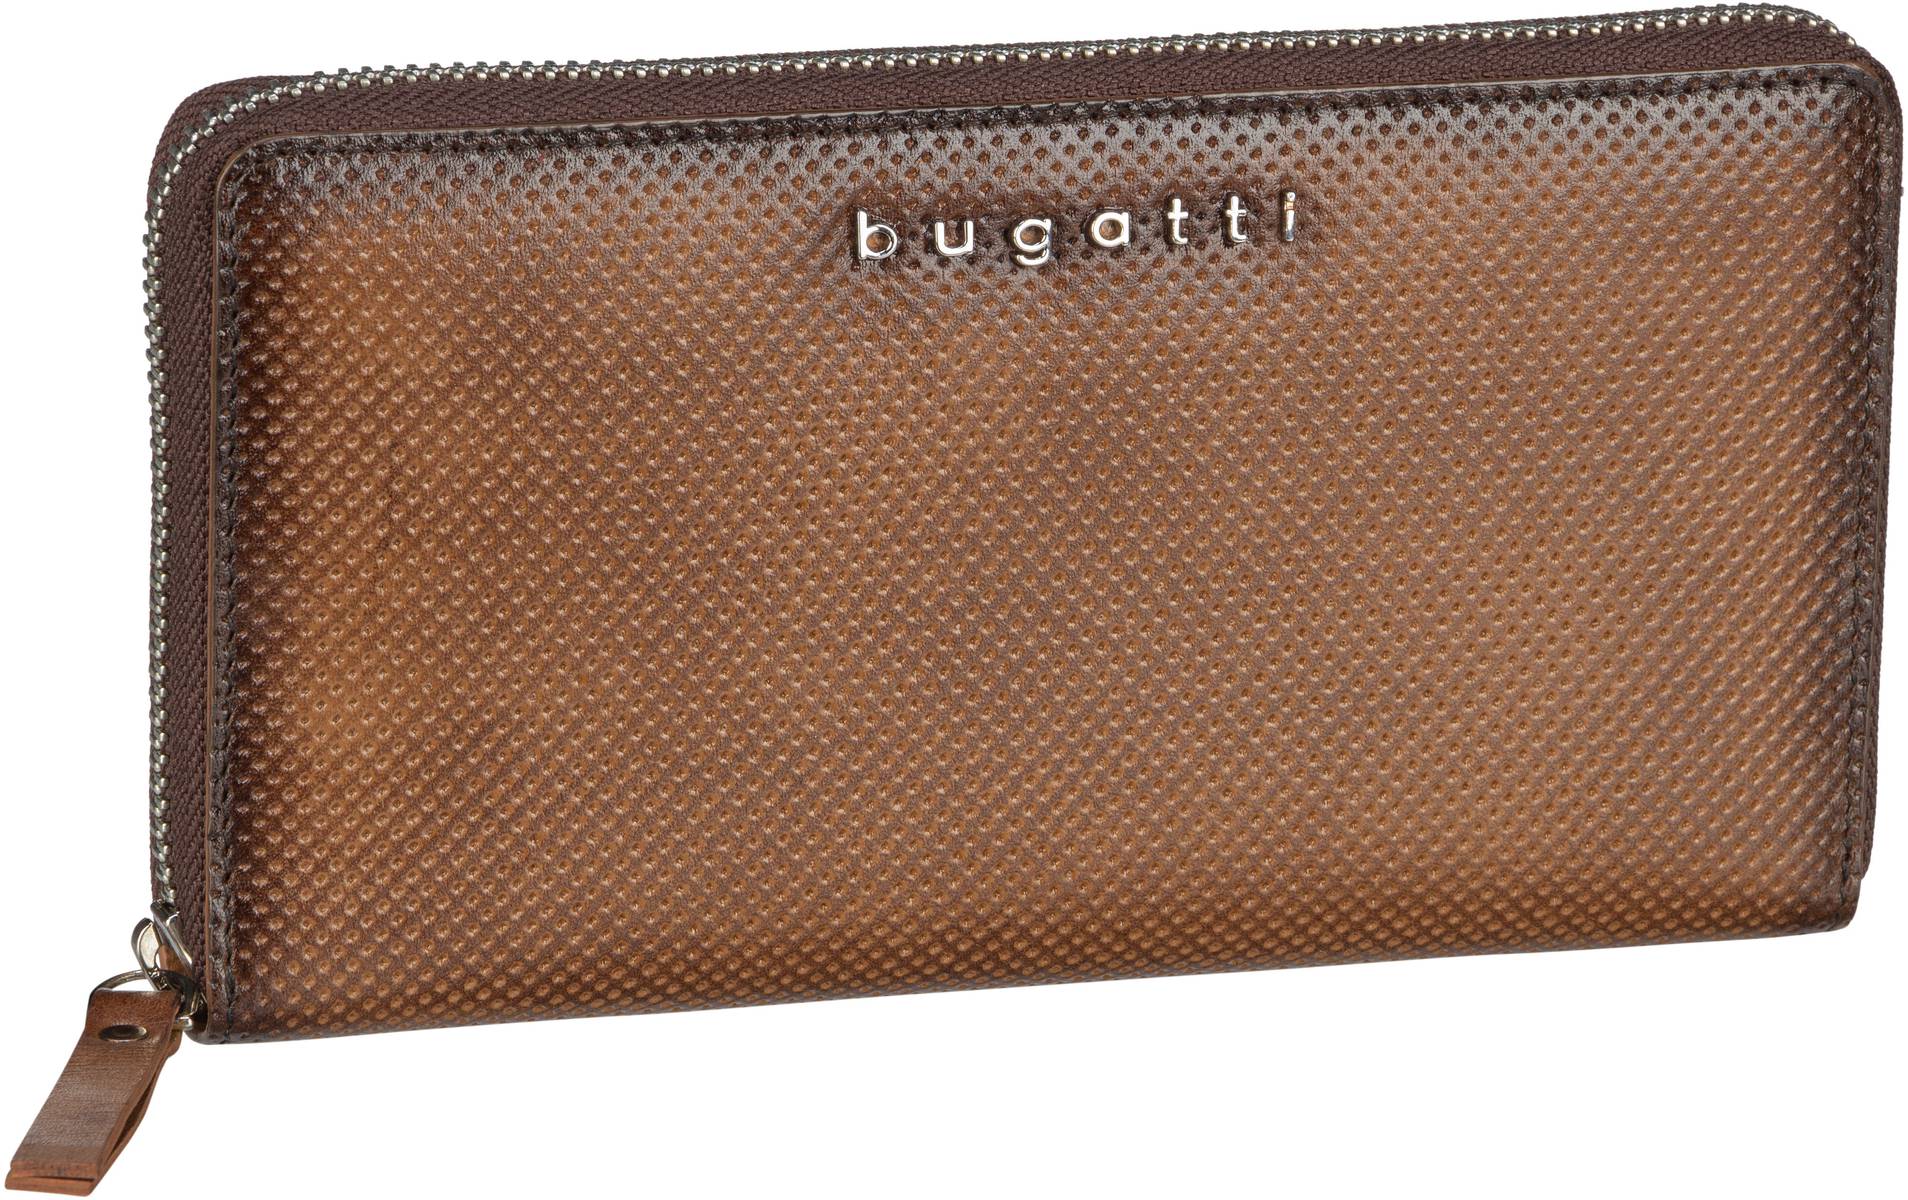 Bugatti Perfo Wallet 3975 - Braun